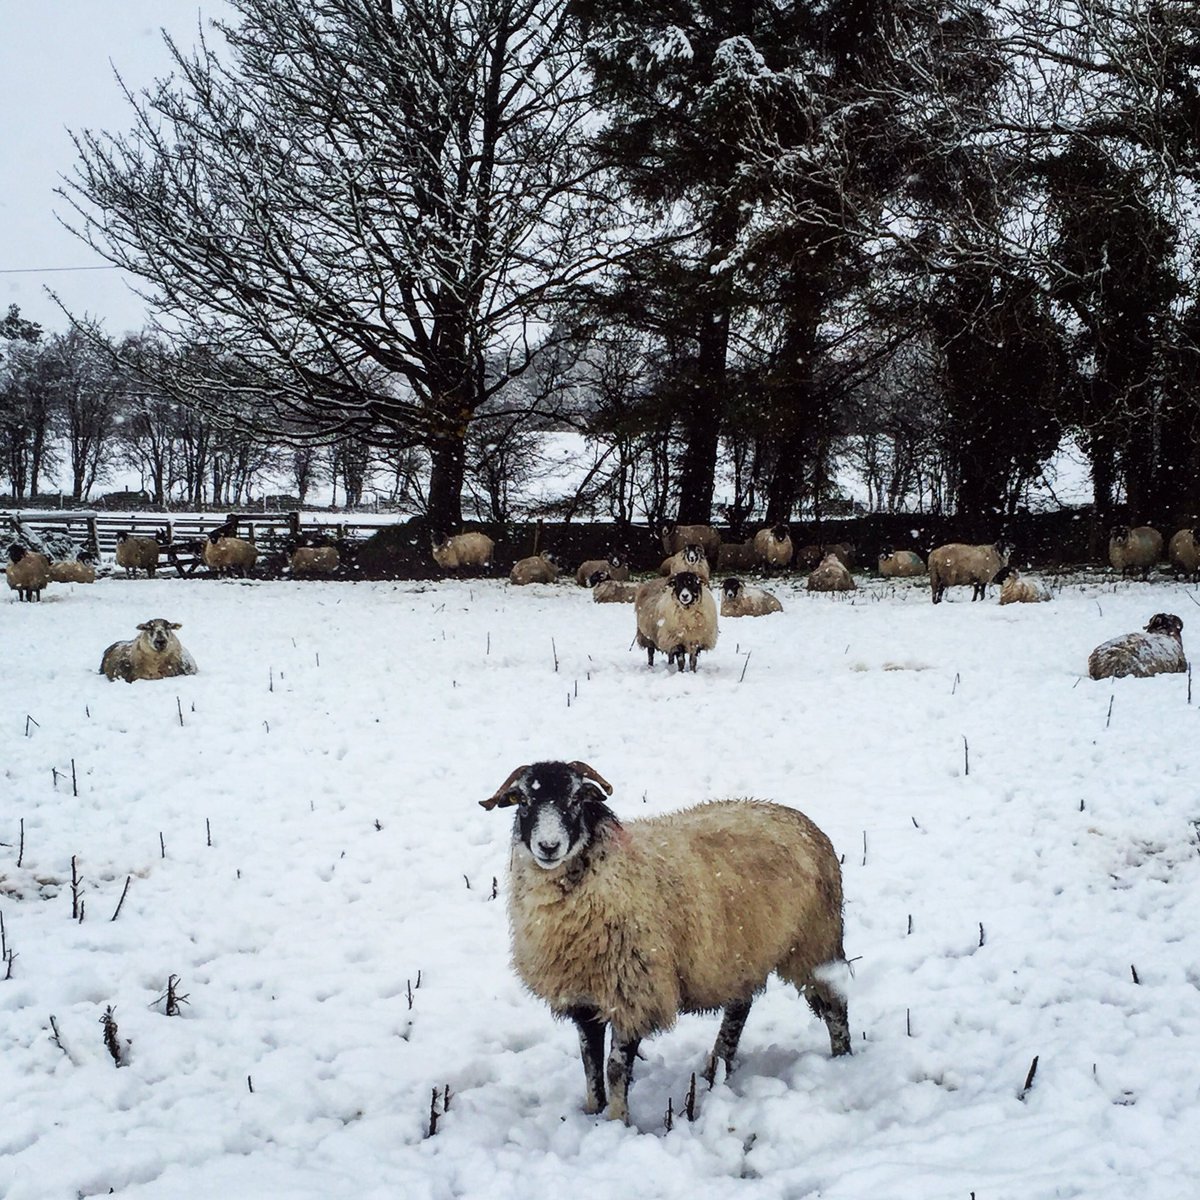 Sheep battling the elements in Galway today! 🐑❄️ #farmingireland